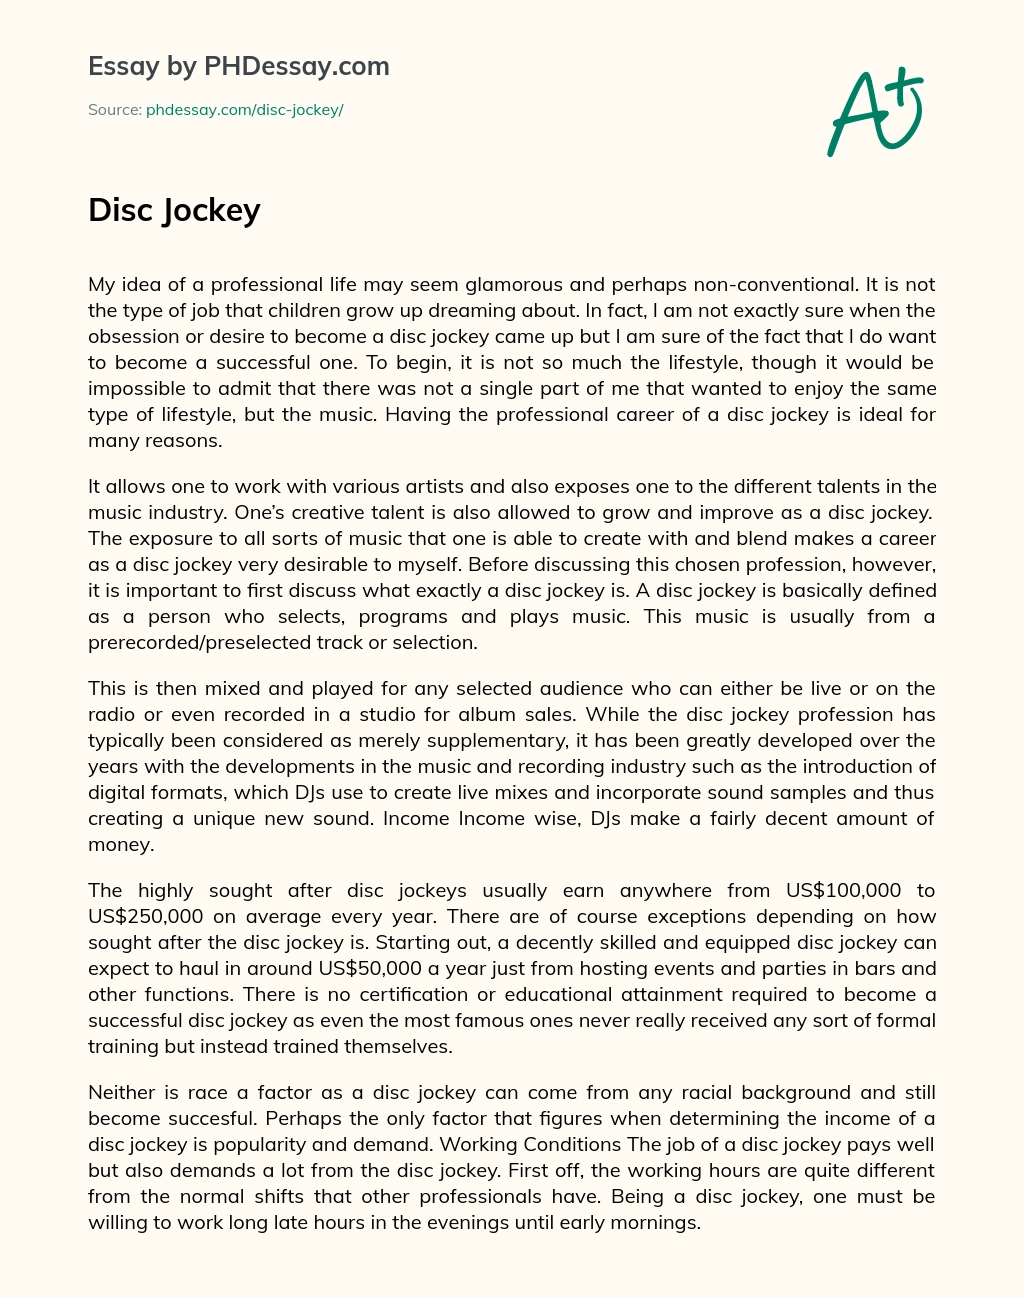 Disc Jockey essay